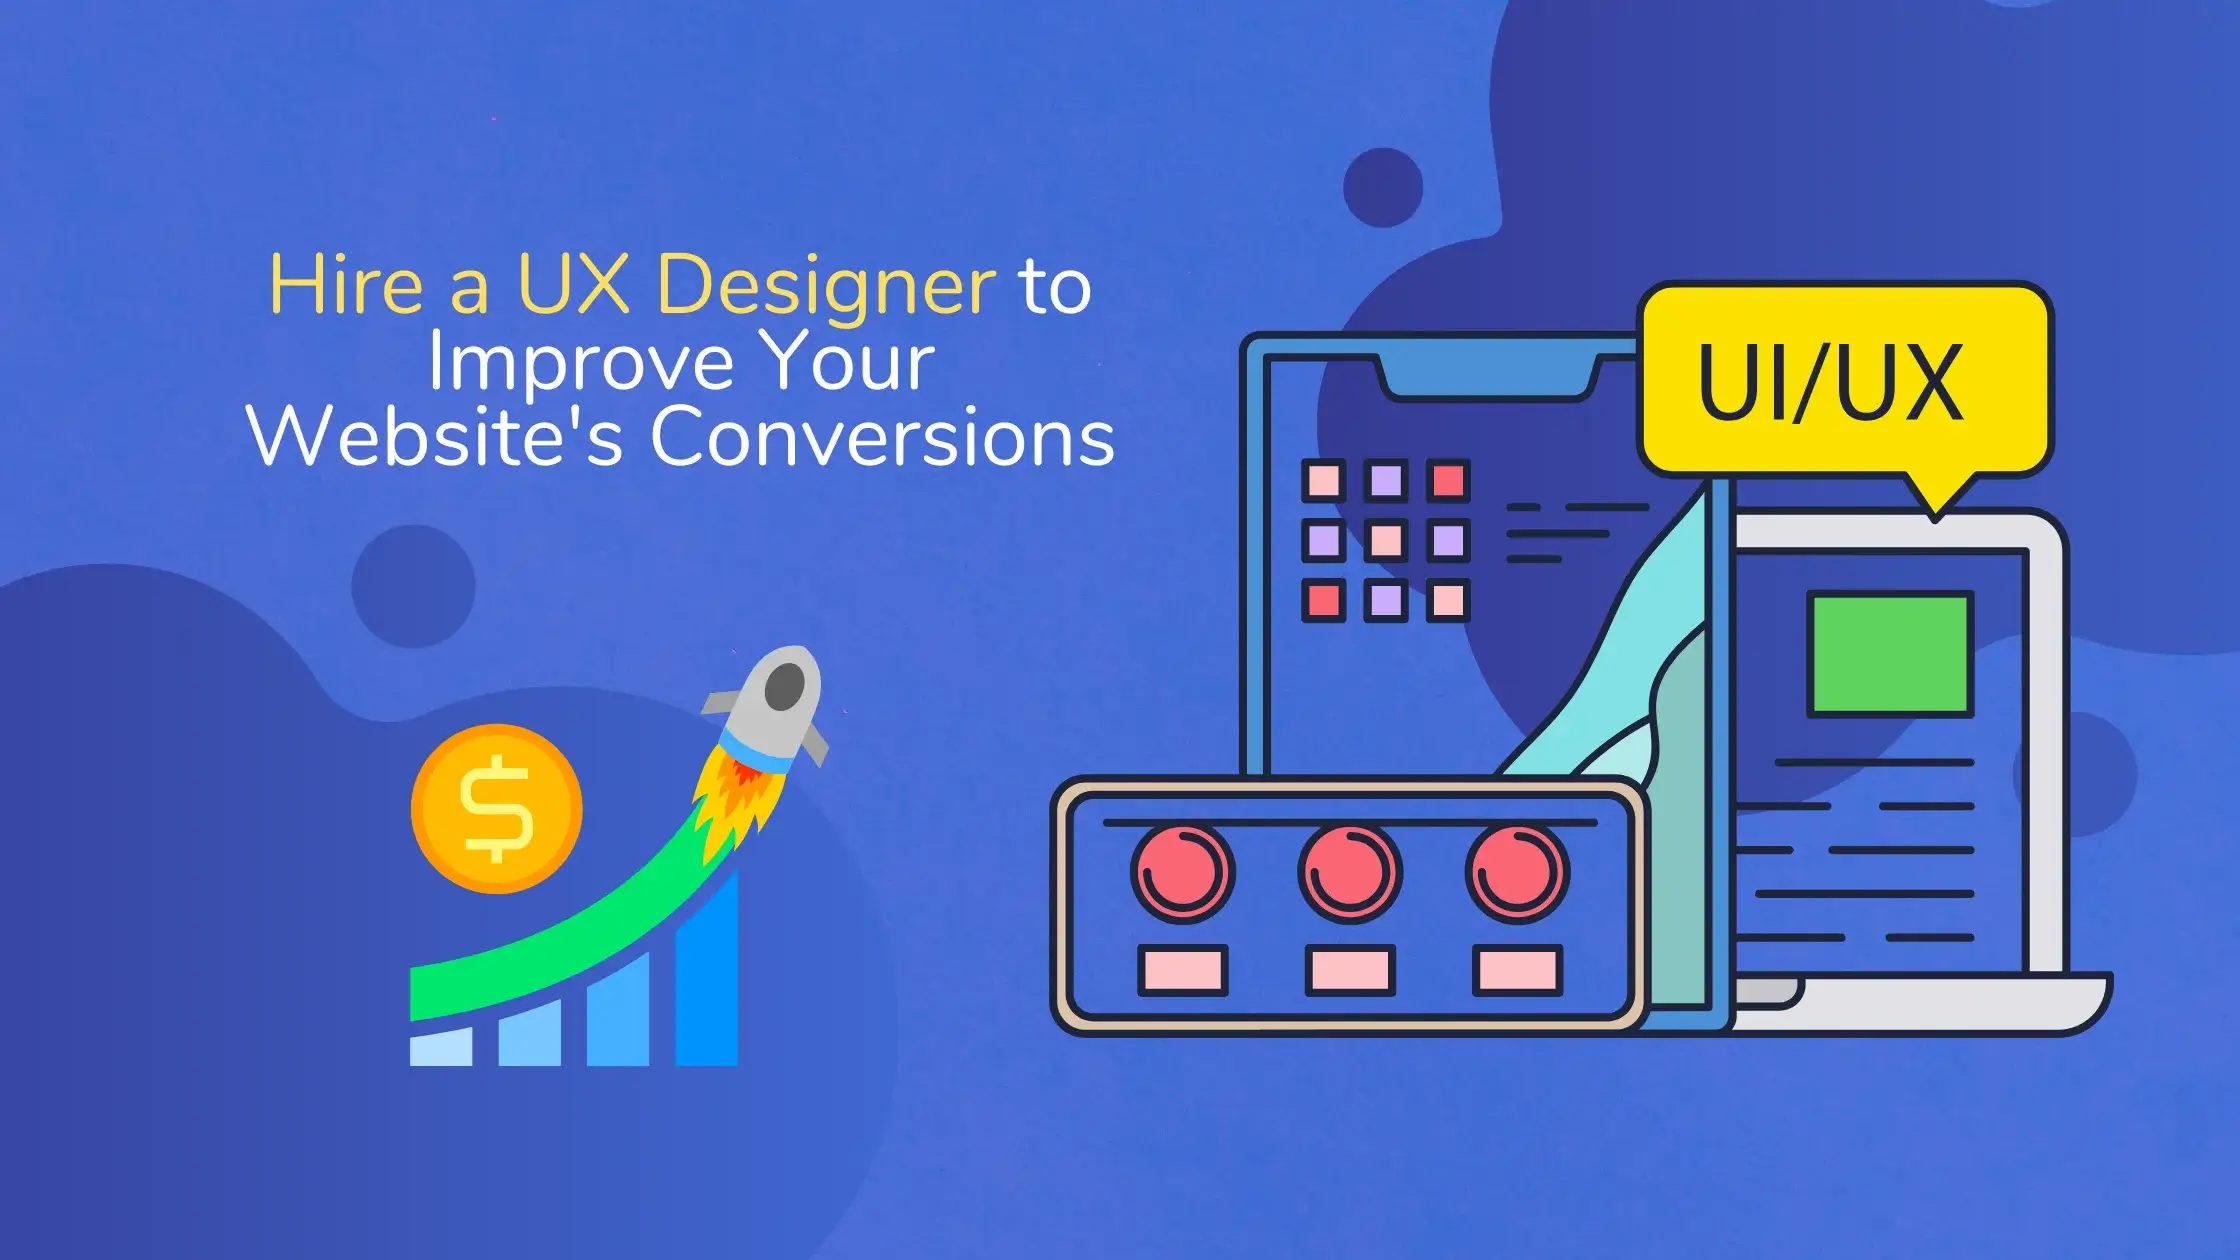 Hire-a-UX-Designer-to-Improve-Your-Websites-Conversions-1